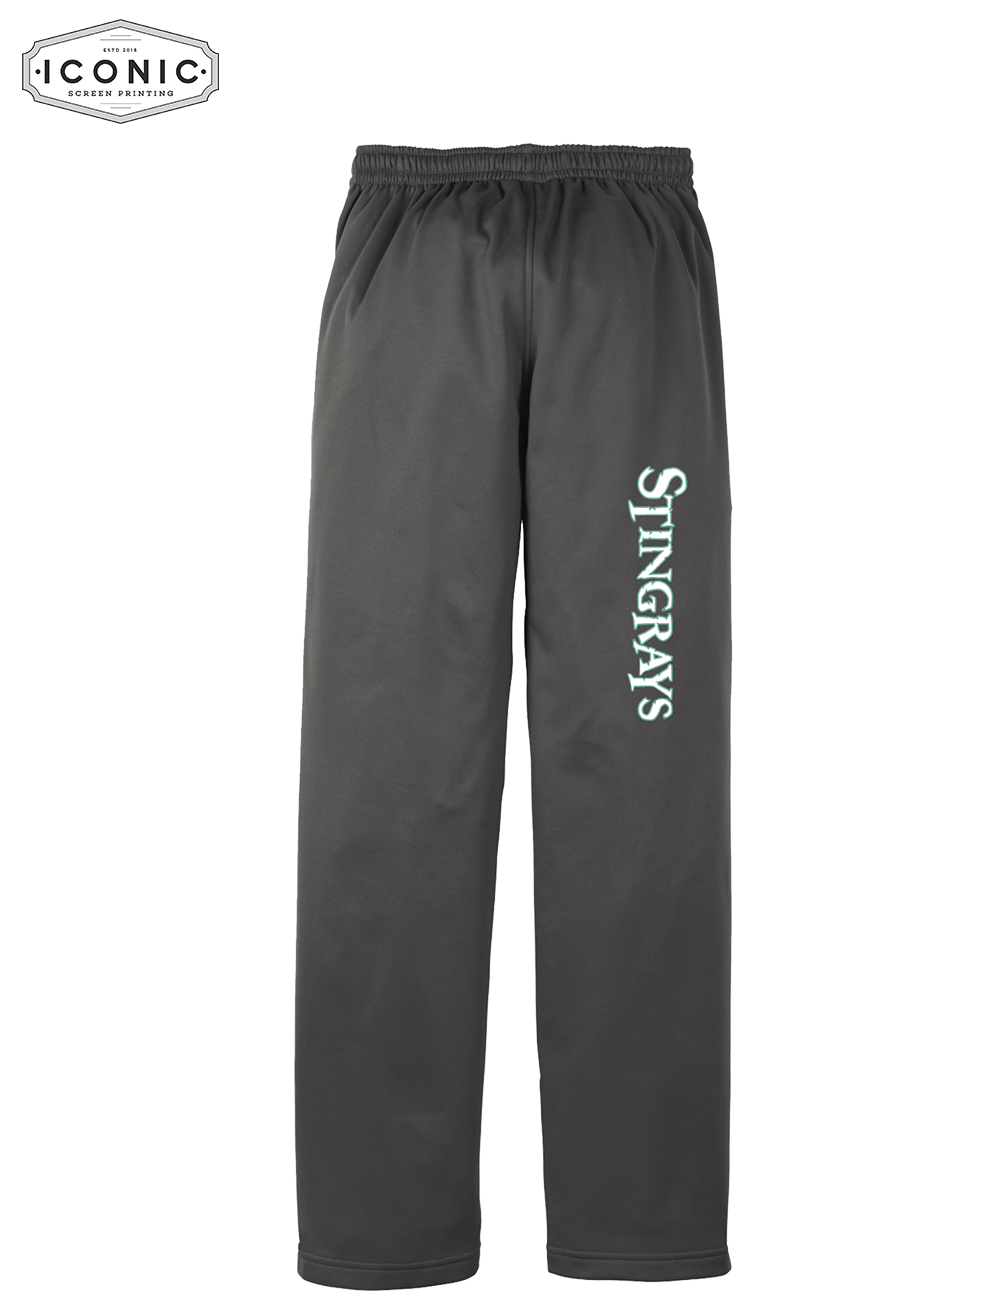 Stingrays Warmups Ladies - Sport-Wick Fleece Pant